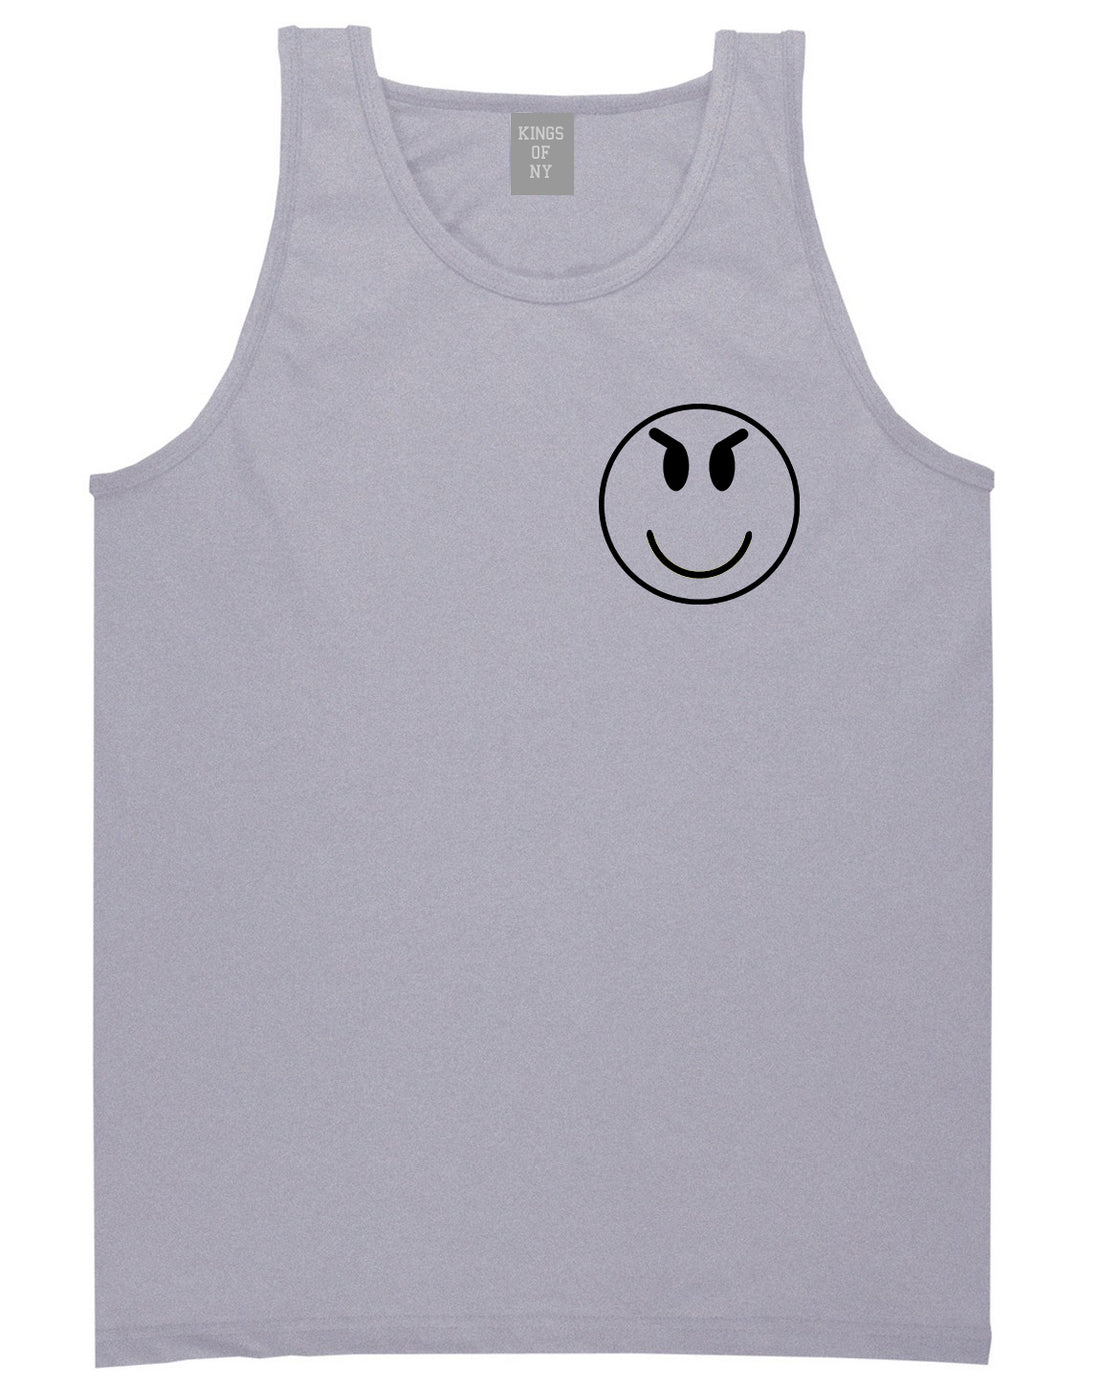 Evil Face Emoji Chest Mens Grey Tank Top Shirt by KINGS OF NY